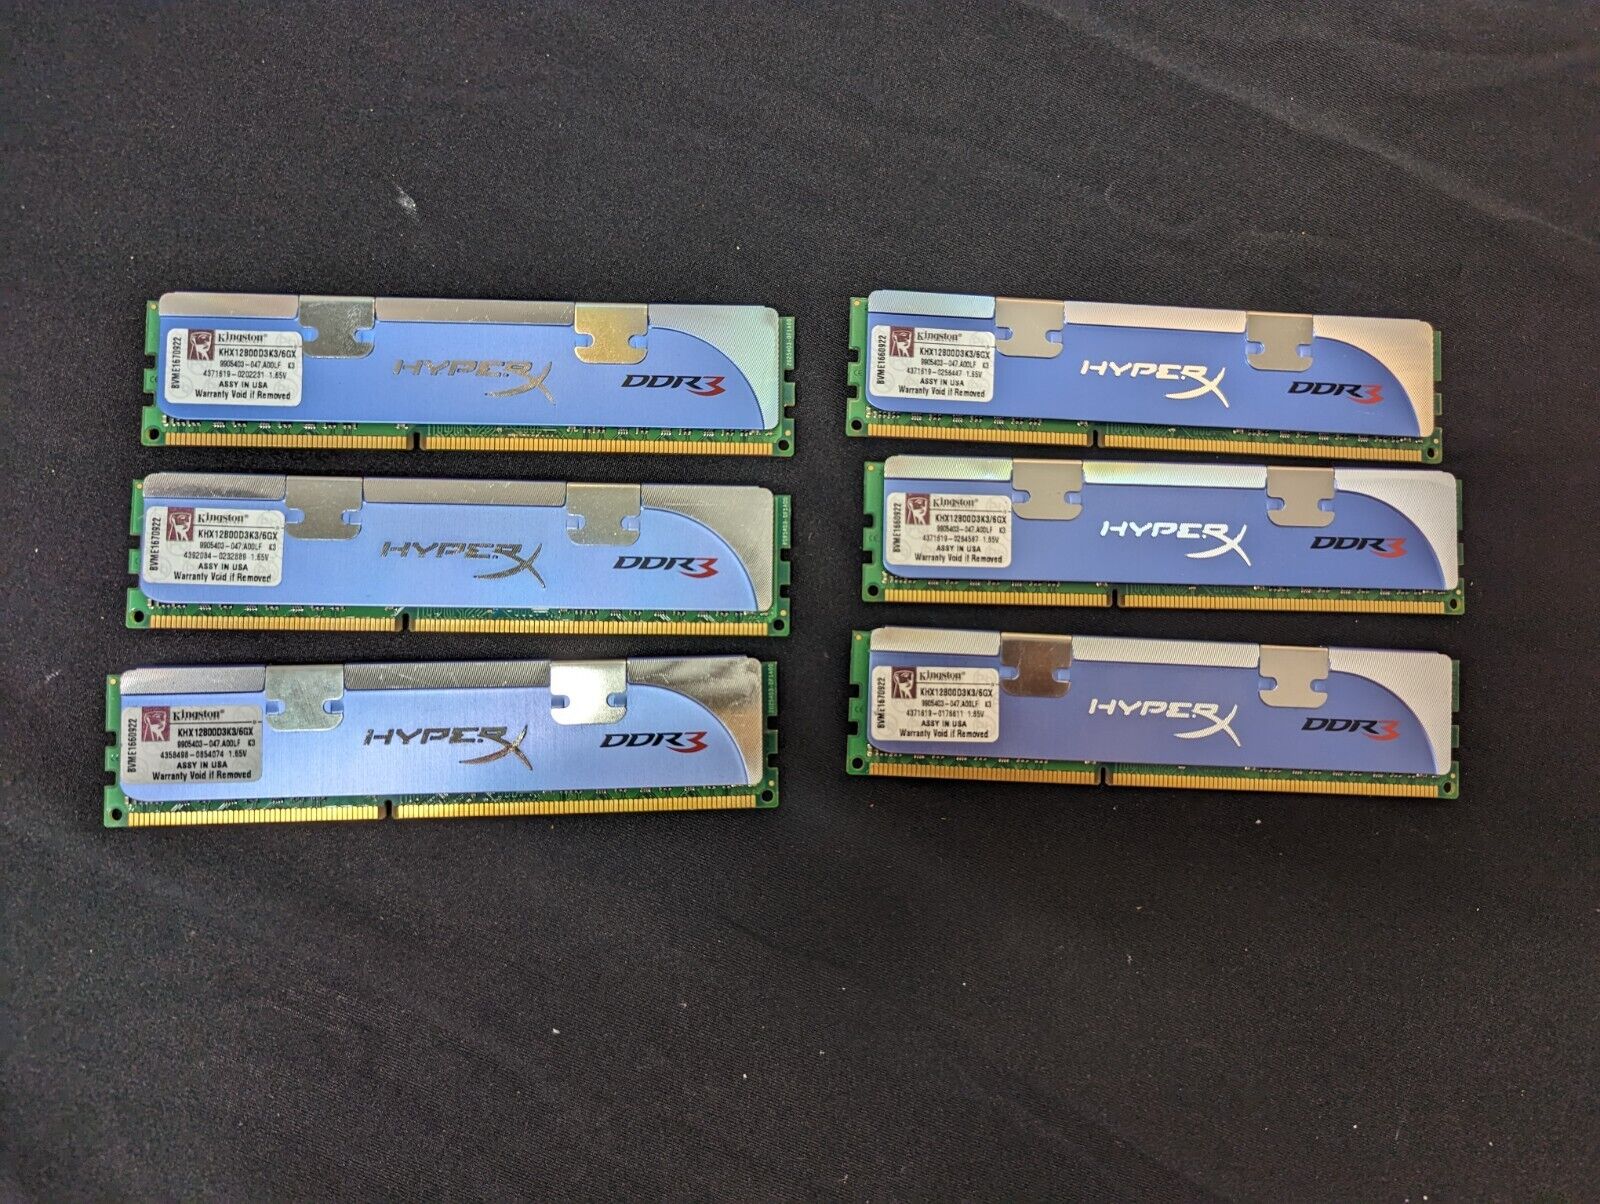 Kingston 12GB (6 x 2GB) KHX12800D3K3/6GX HyperX DDR3 RAM